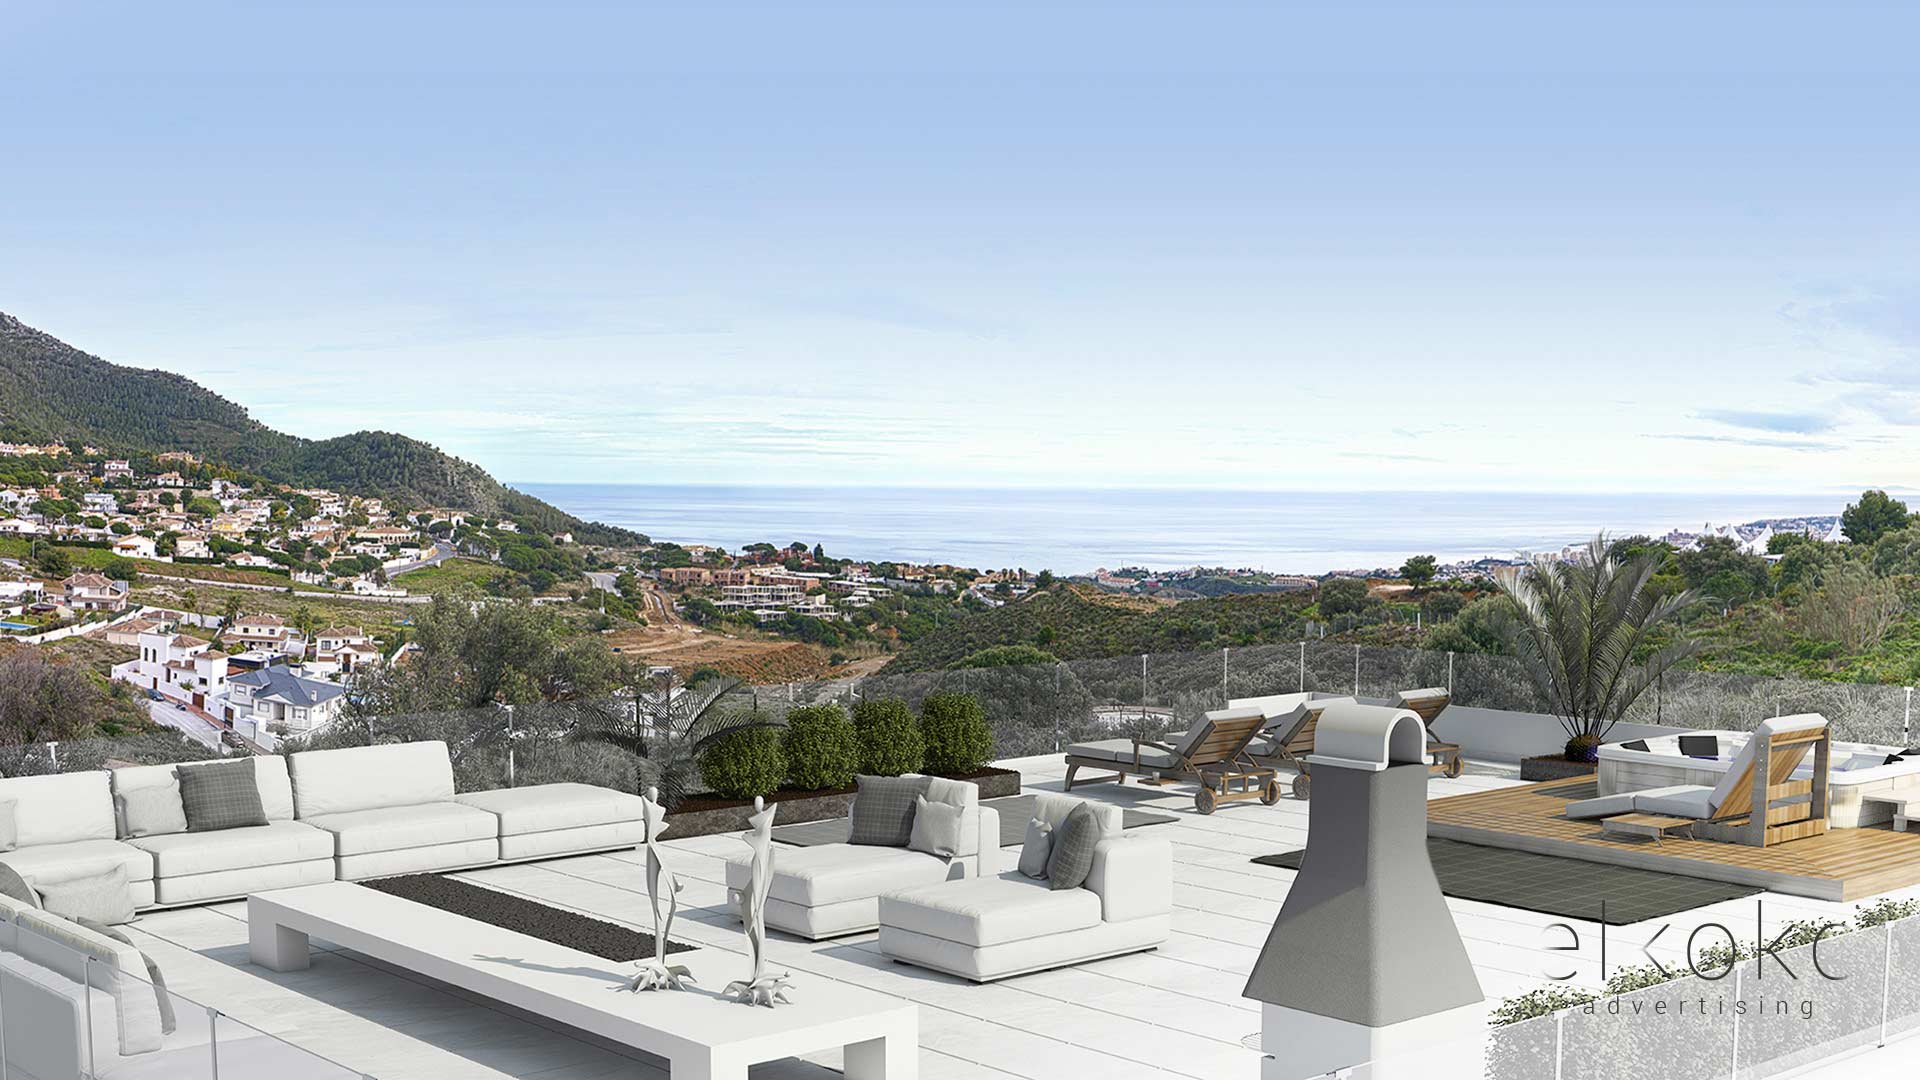 Infografias 3D para viviendas. Modelados 3D y render 3D. Málaga.